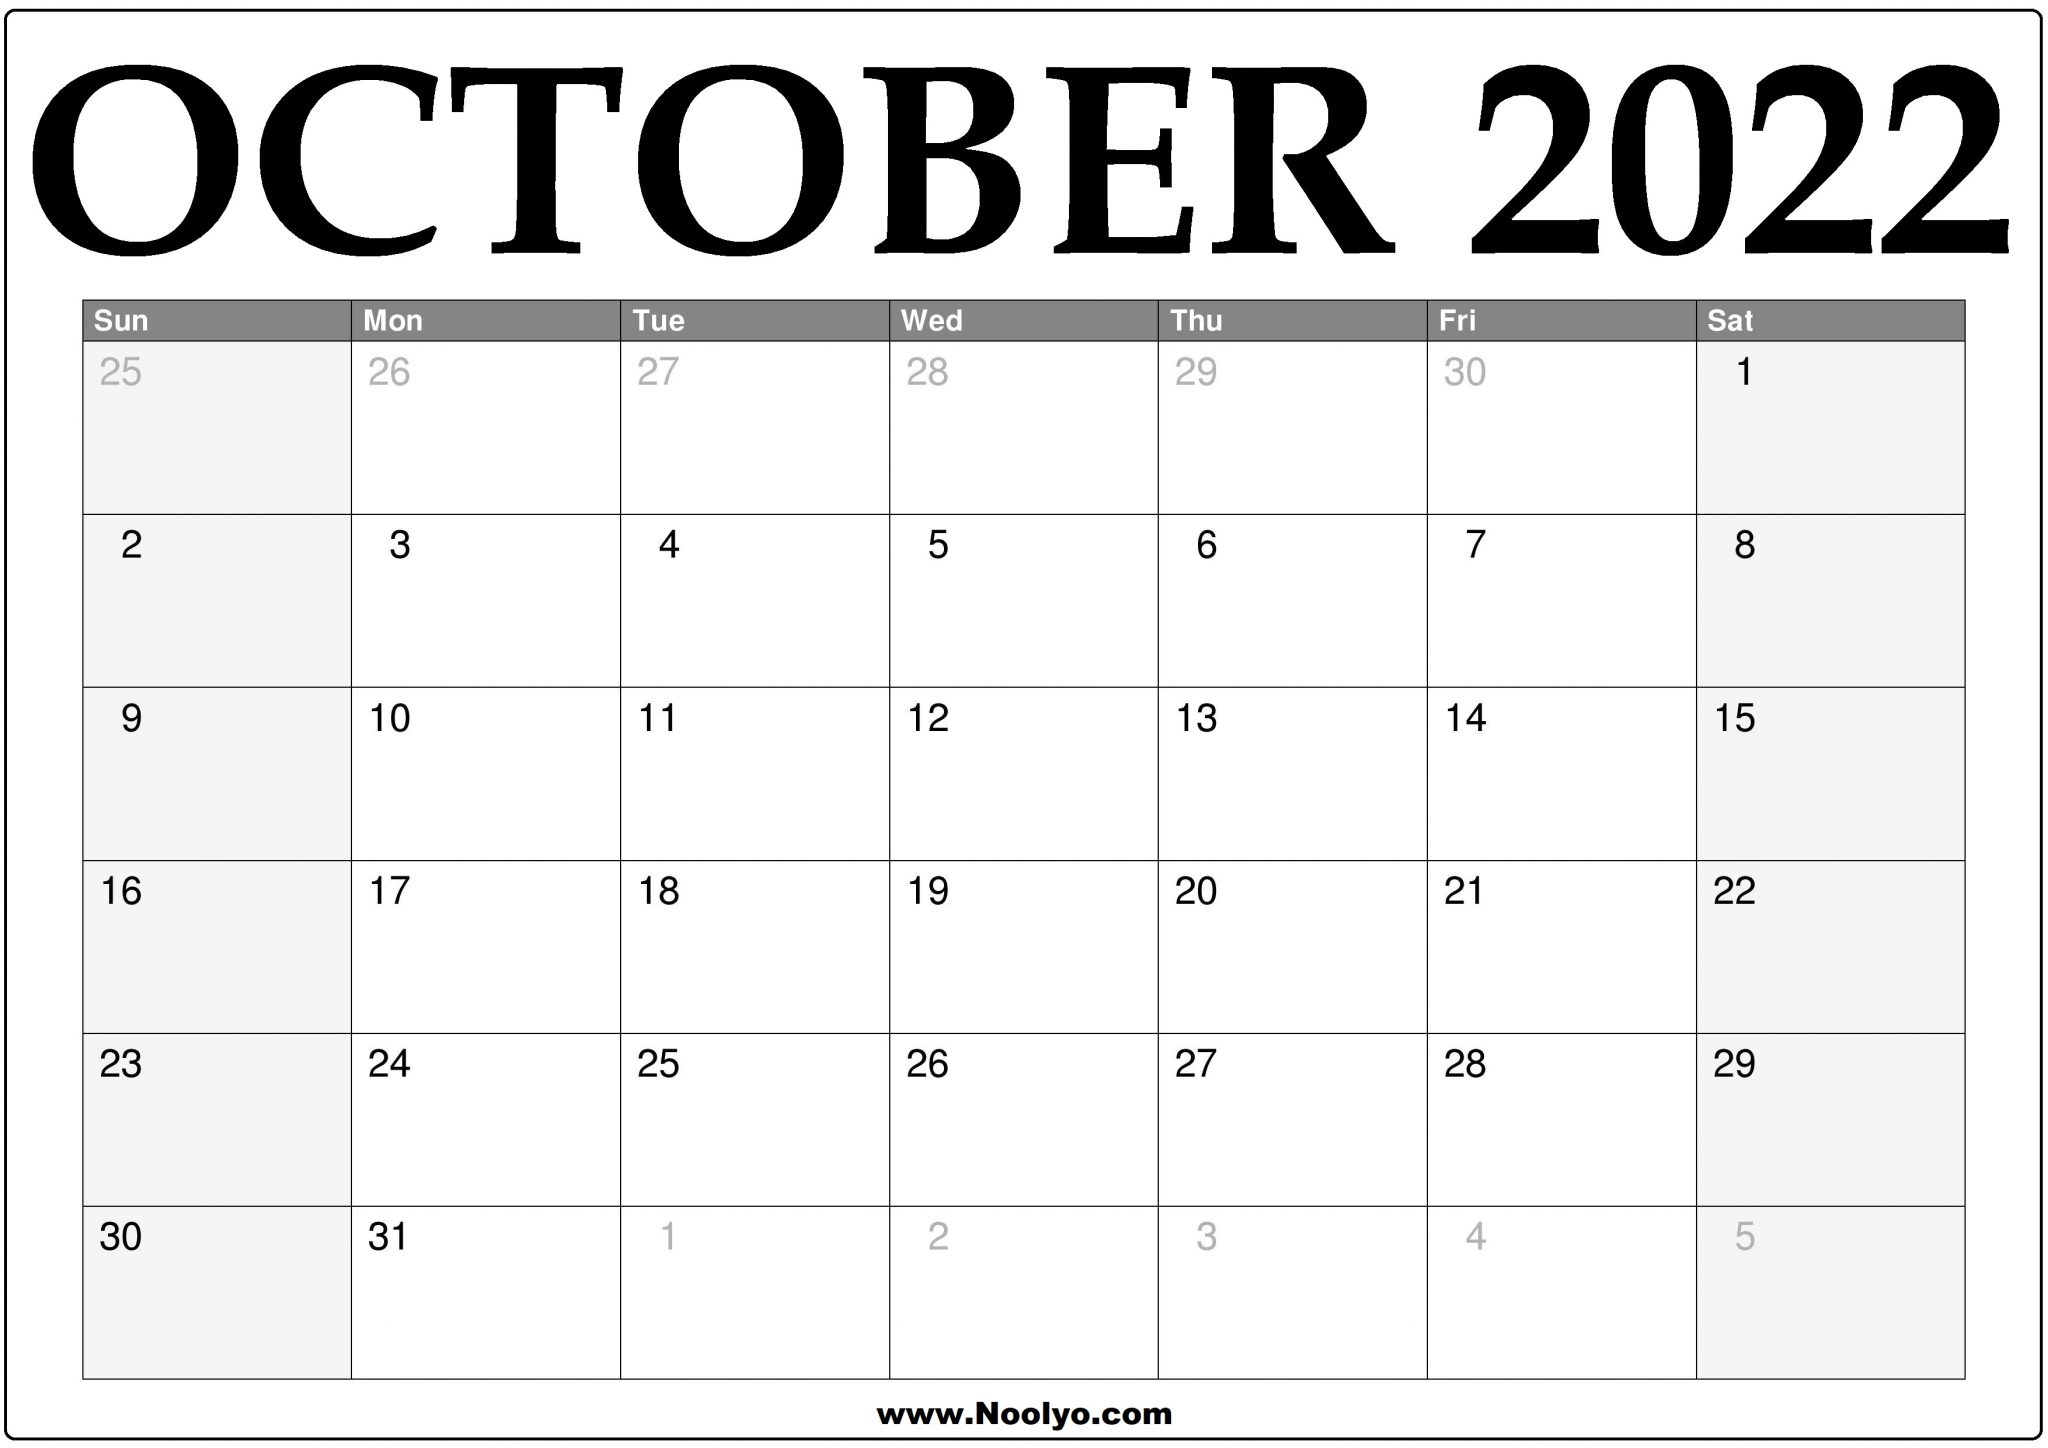 2022-october-calendar-printable-download-free-calendars-images-and-photos-finder